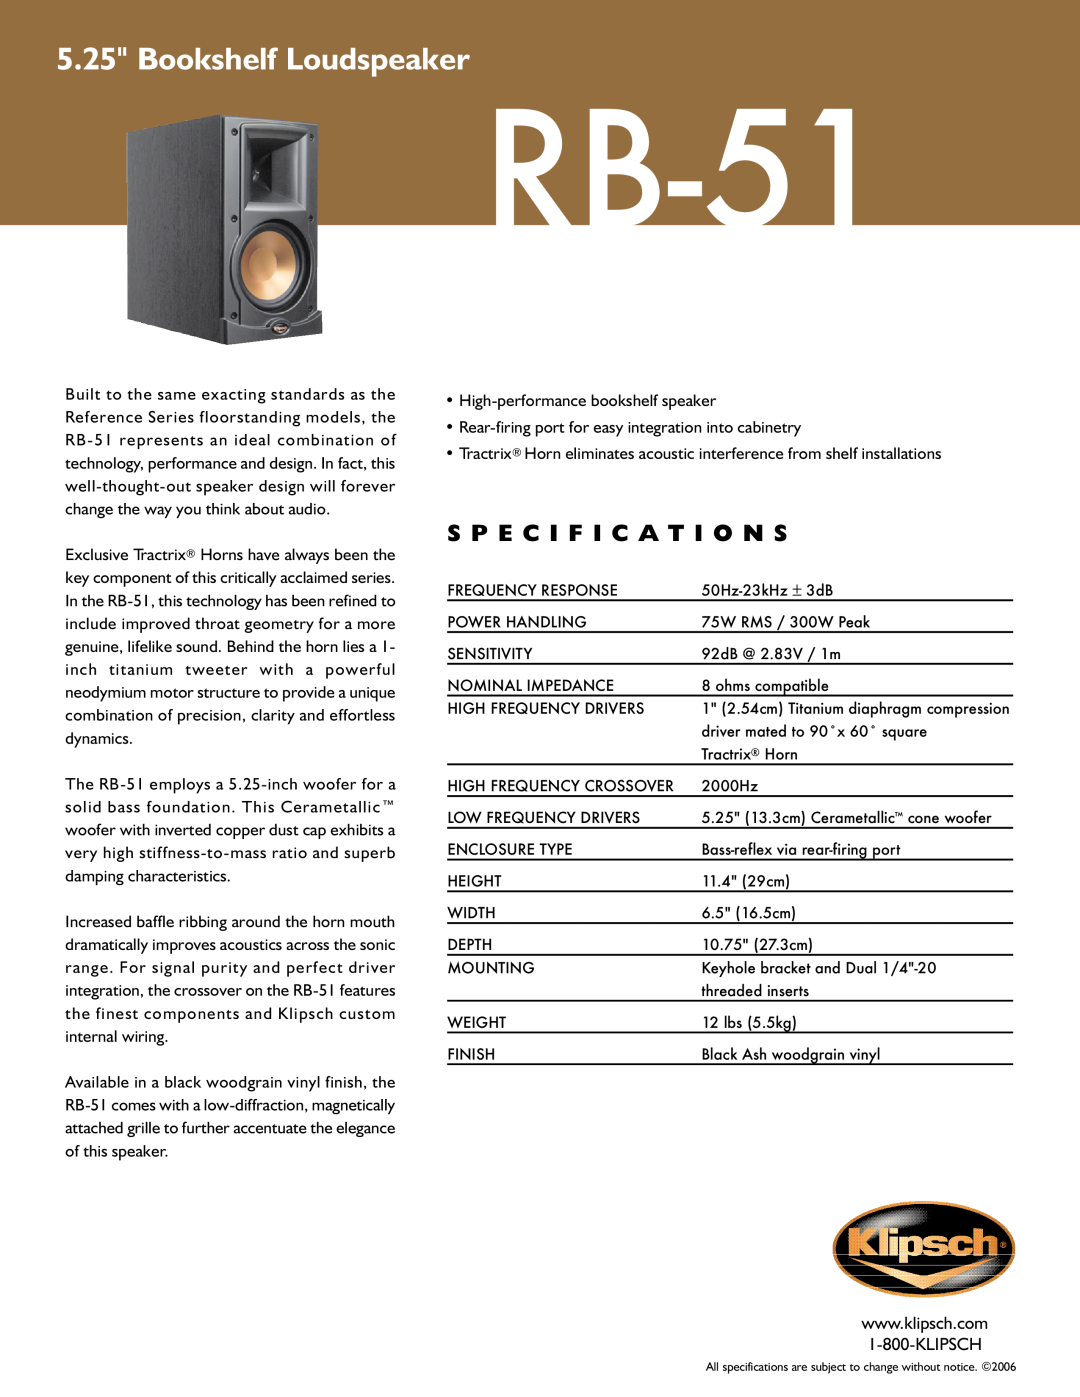 Klipsch RB-51 specifications Bookshelf Loudspeaker, S P E C I F I C A T I O N S 